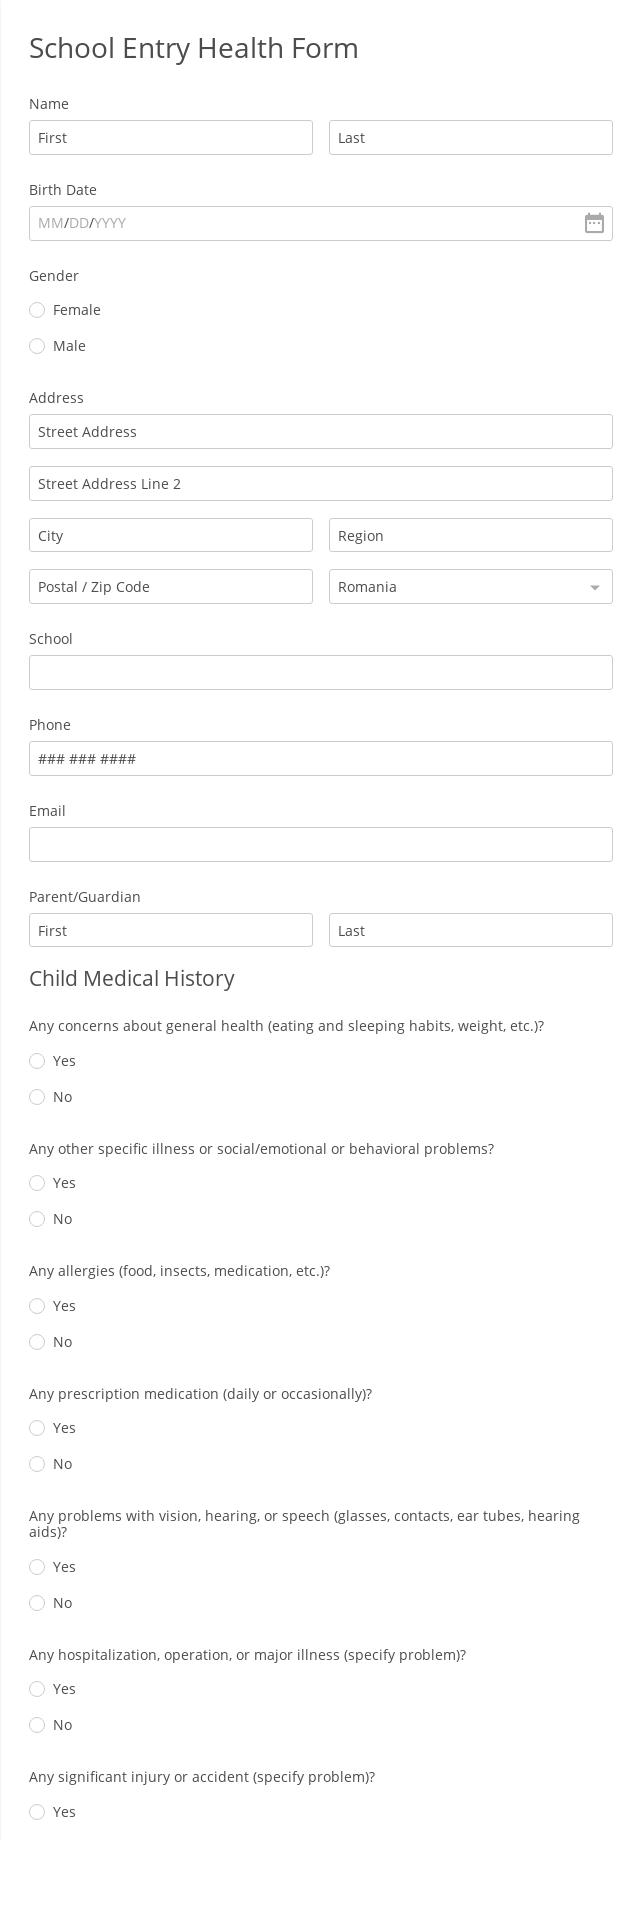 School Entry Health Form